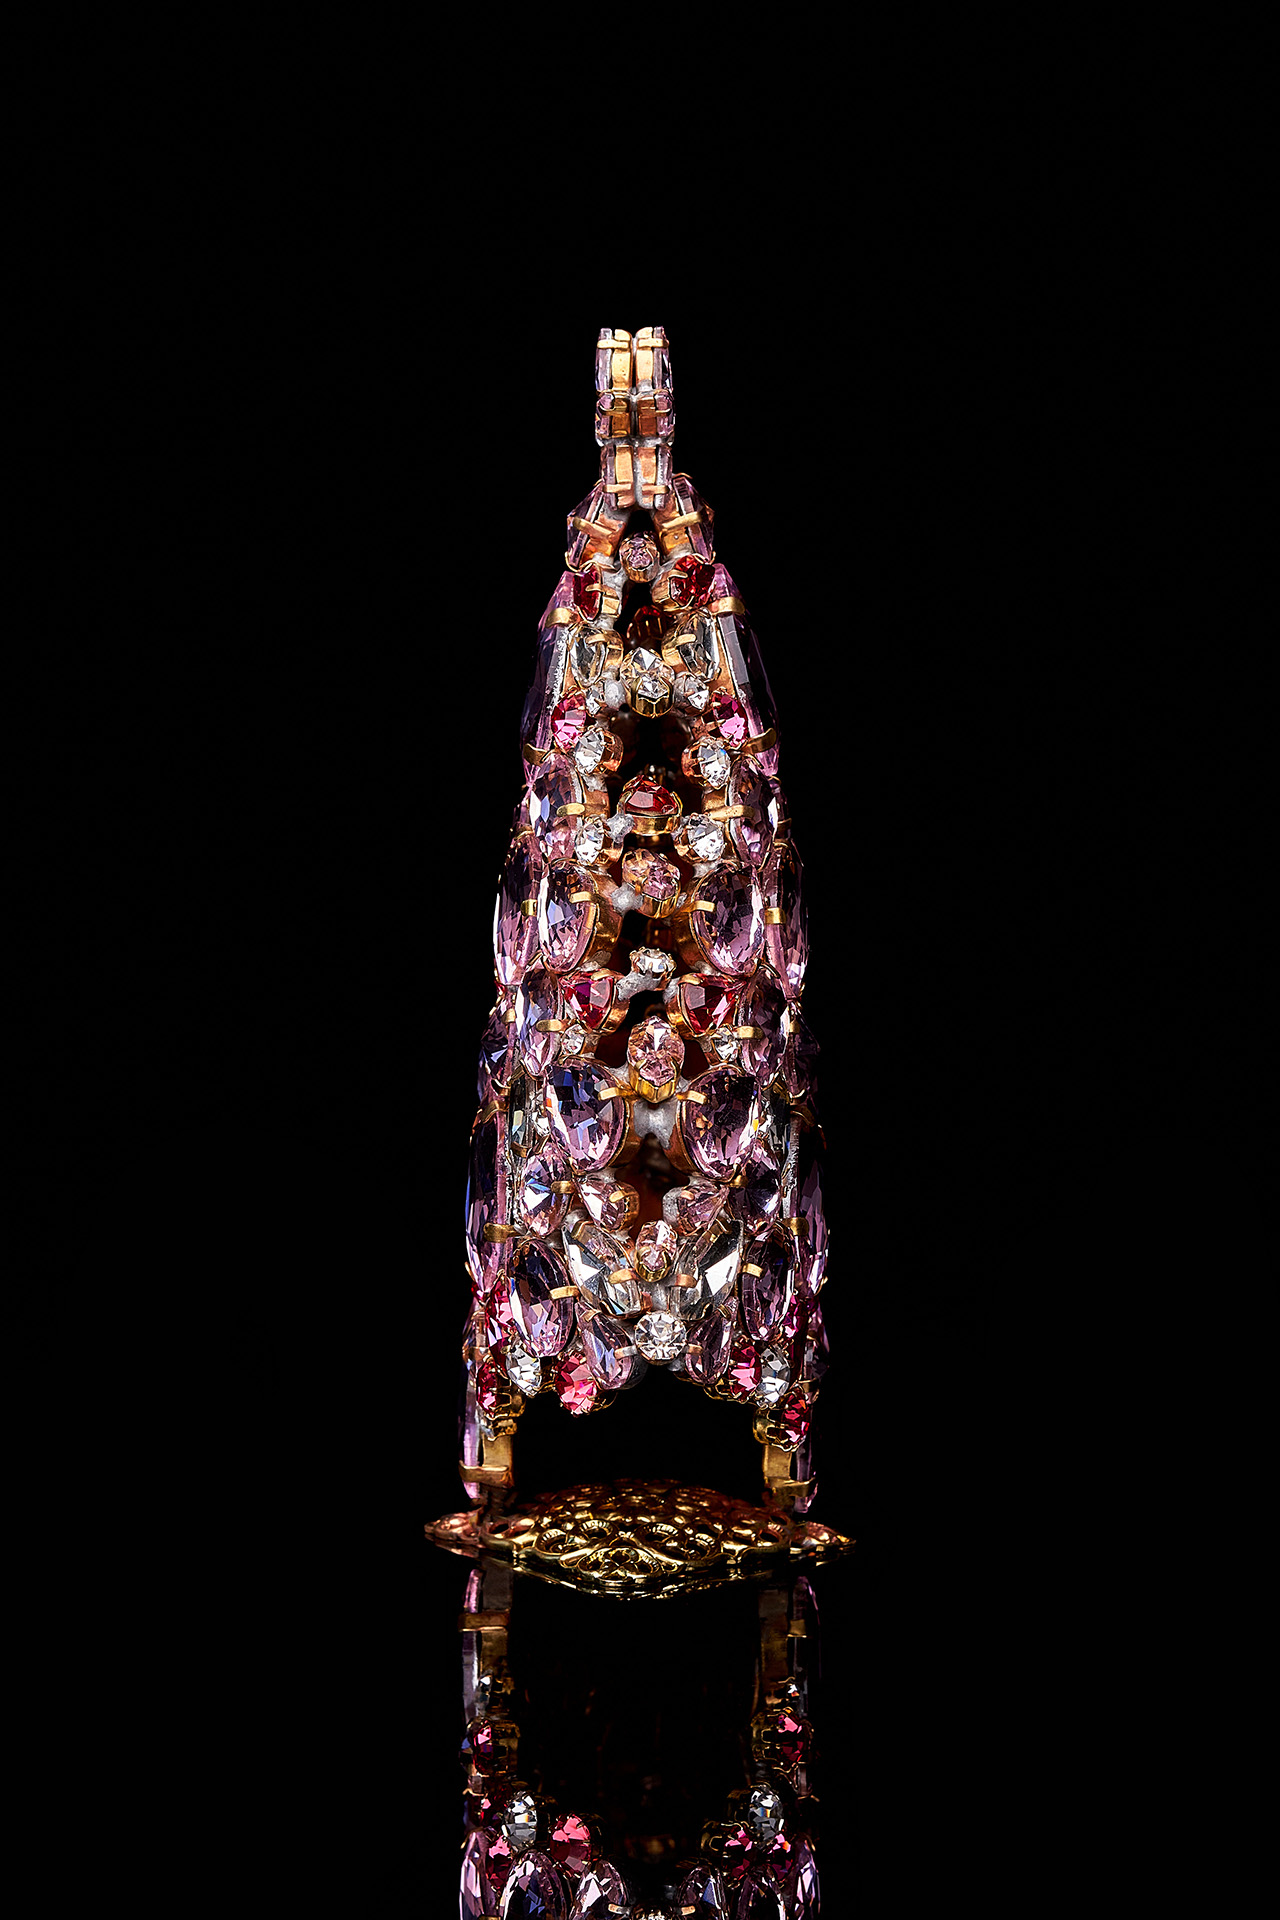 Czech handmade magical 3D Christmas tree from pink rhinestones